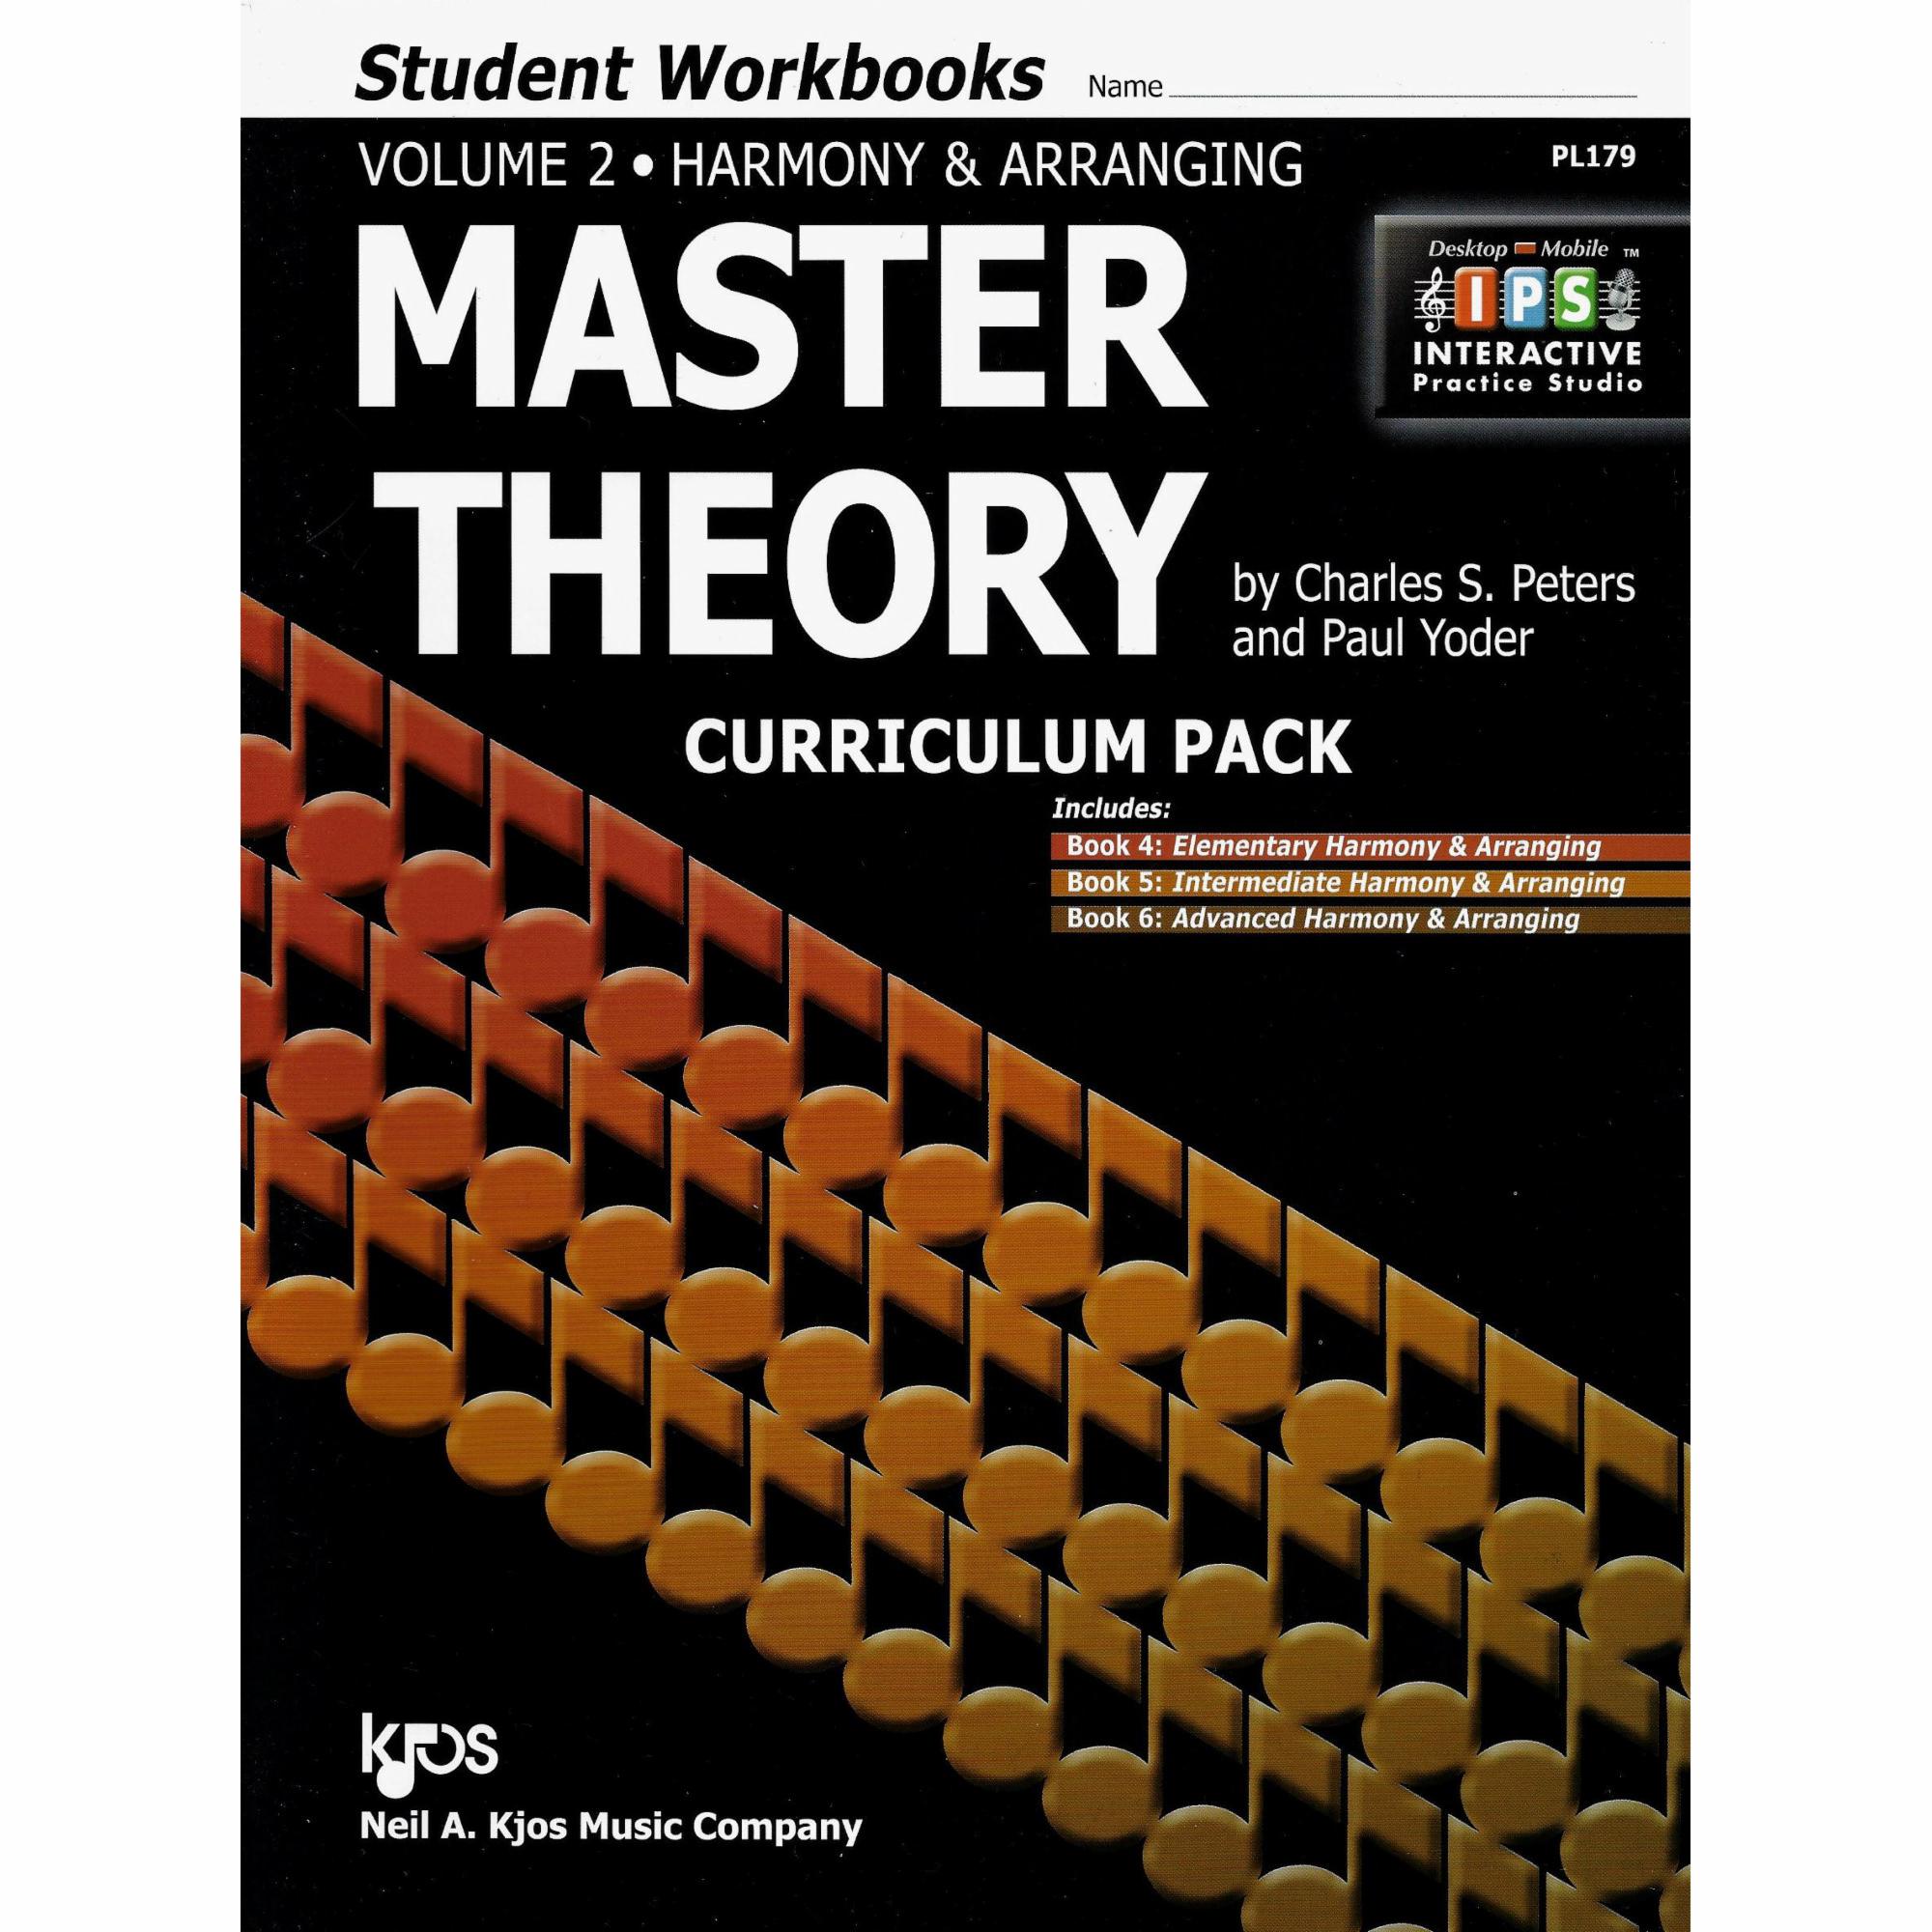 Master Theory Curriculum Pack, Volume 2